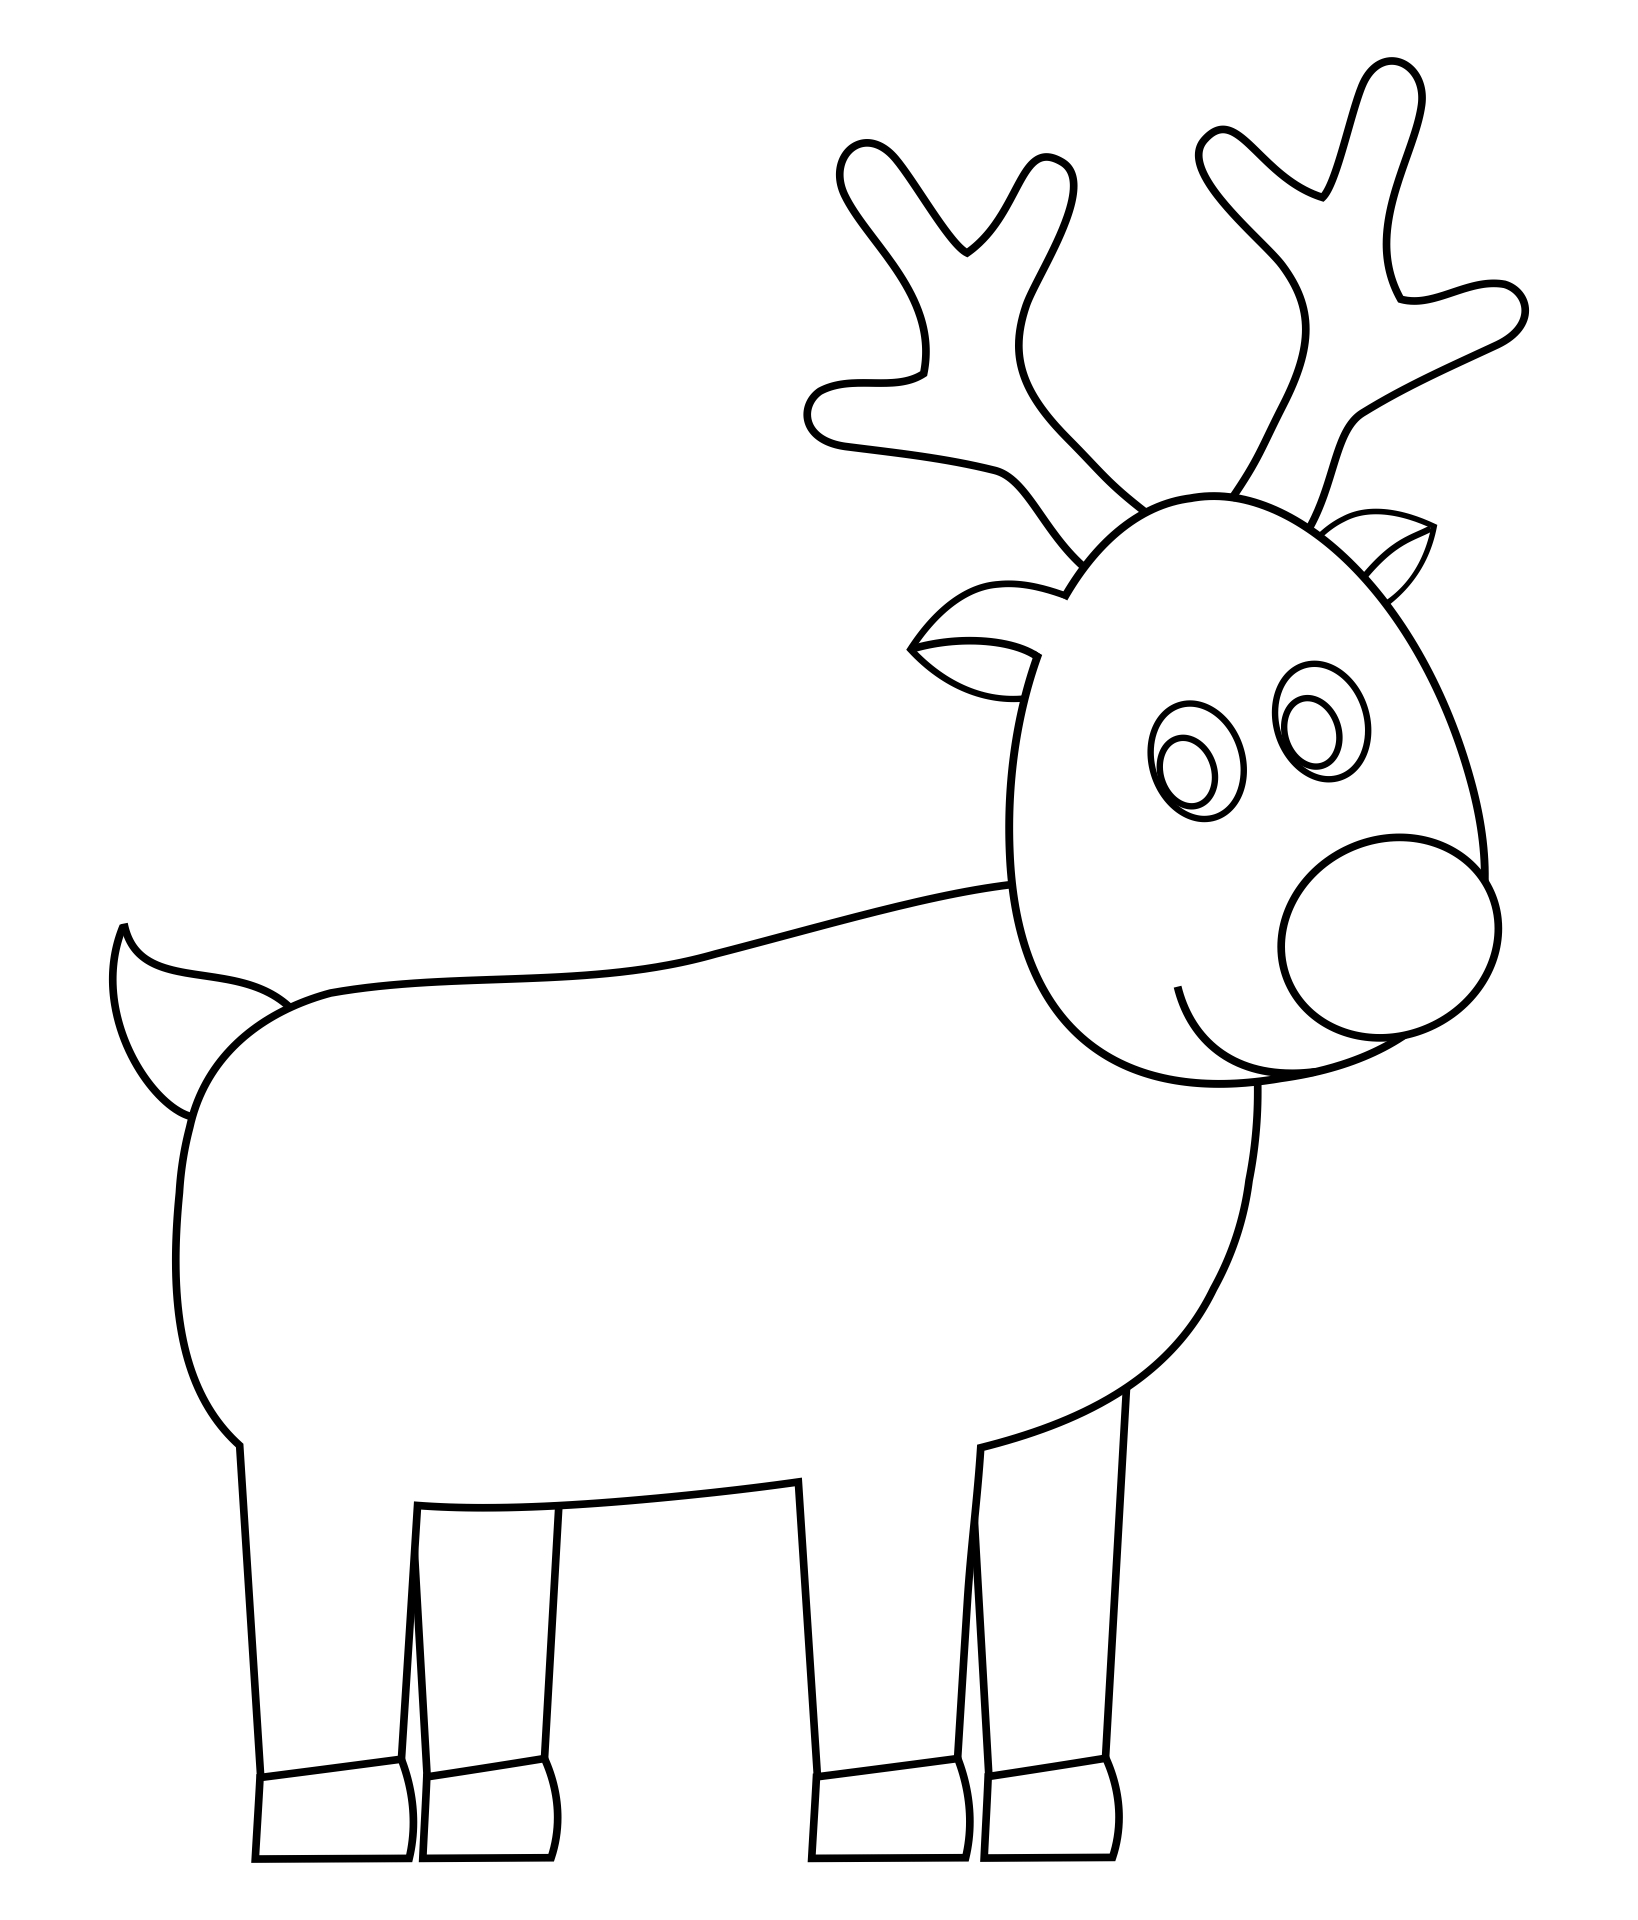 Template Of A Reindeer